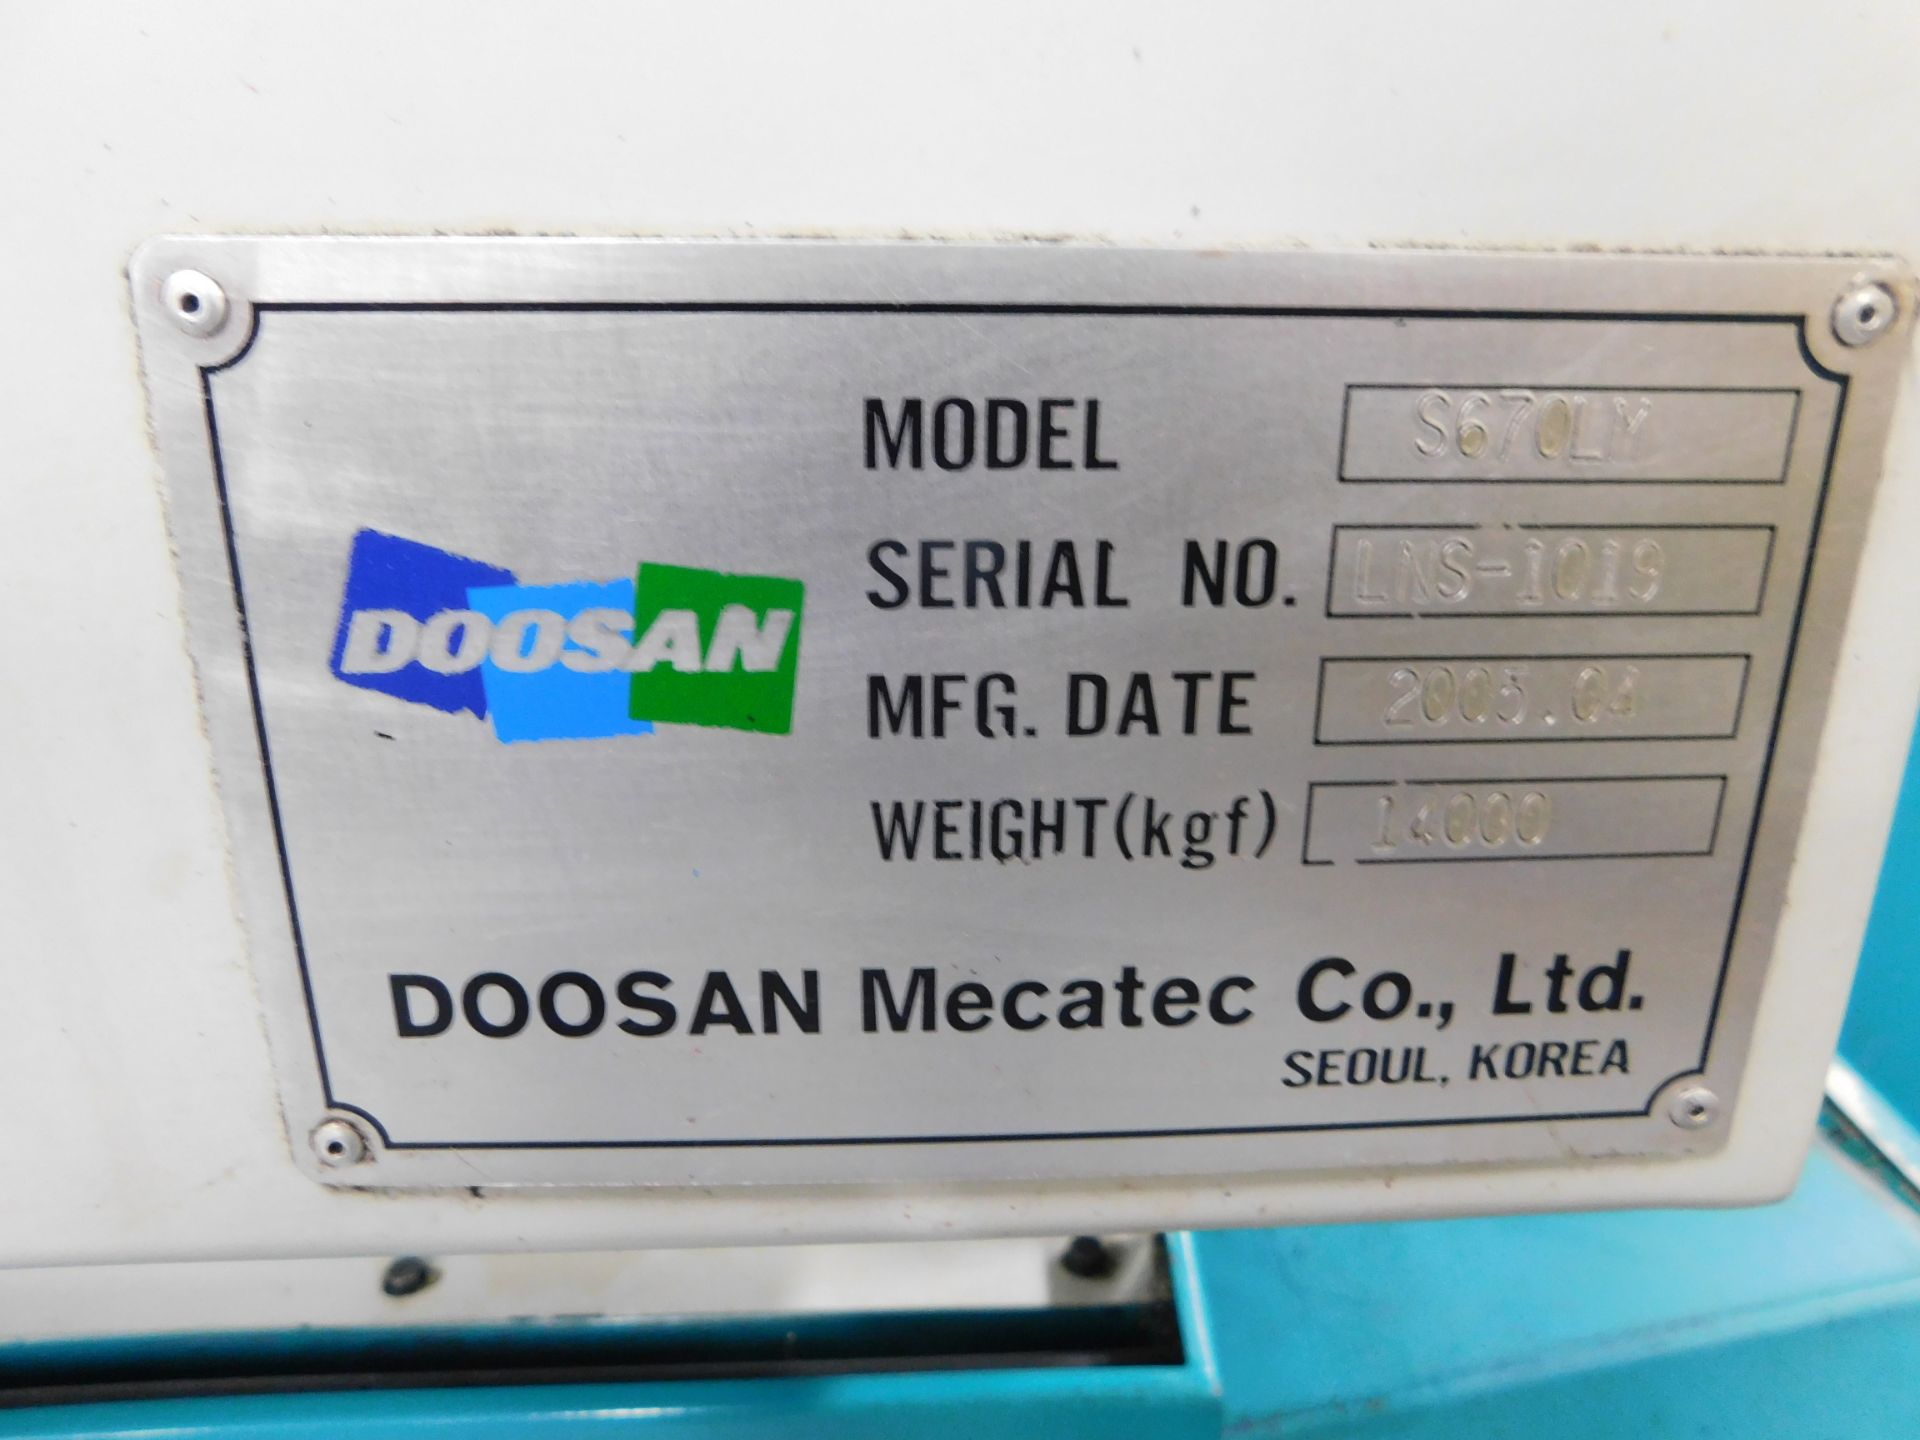 Doosan Model S670-LM CNC Turning Center, S/N LNS1019, New 2007, Fanuc 18i-TB CNC Control, Milling, - Image 9 of 9